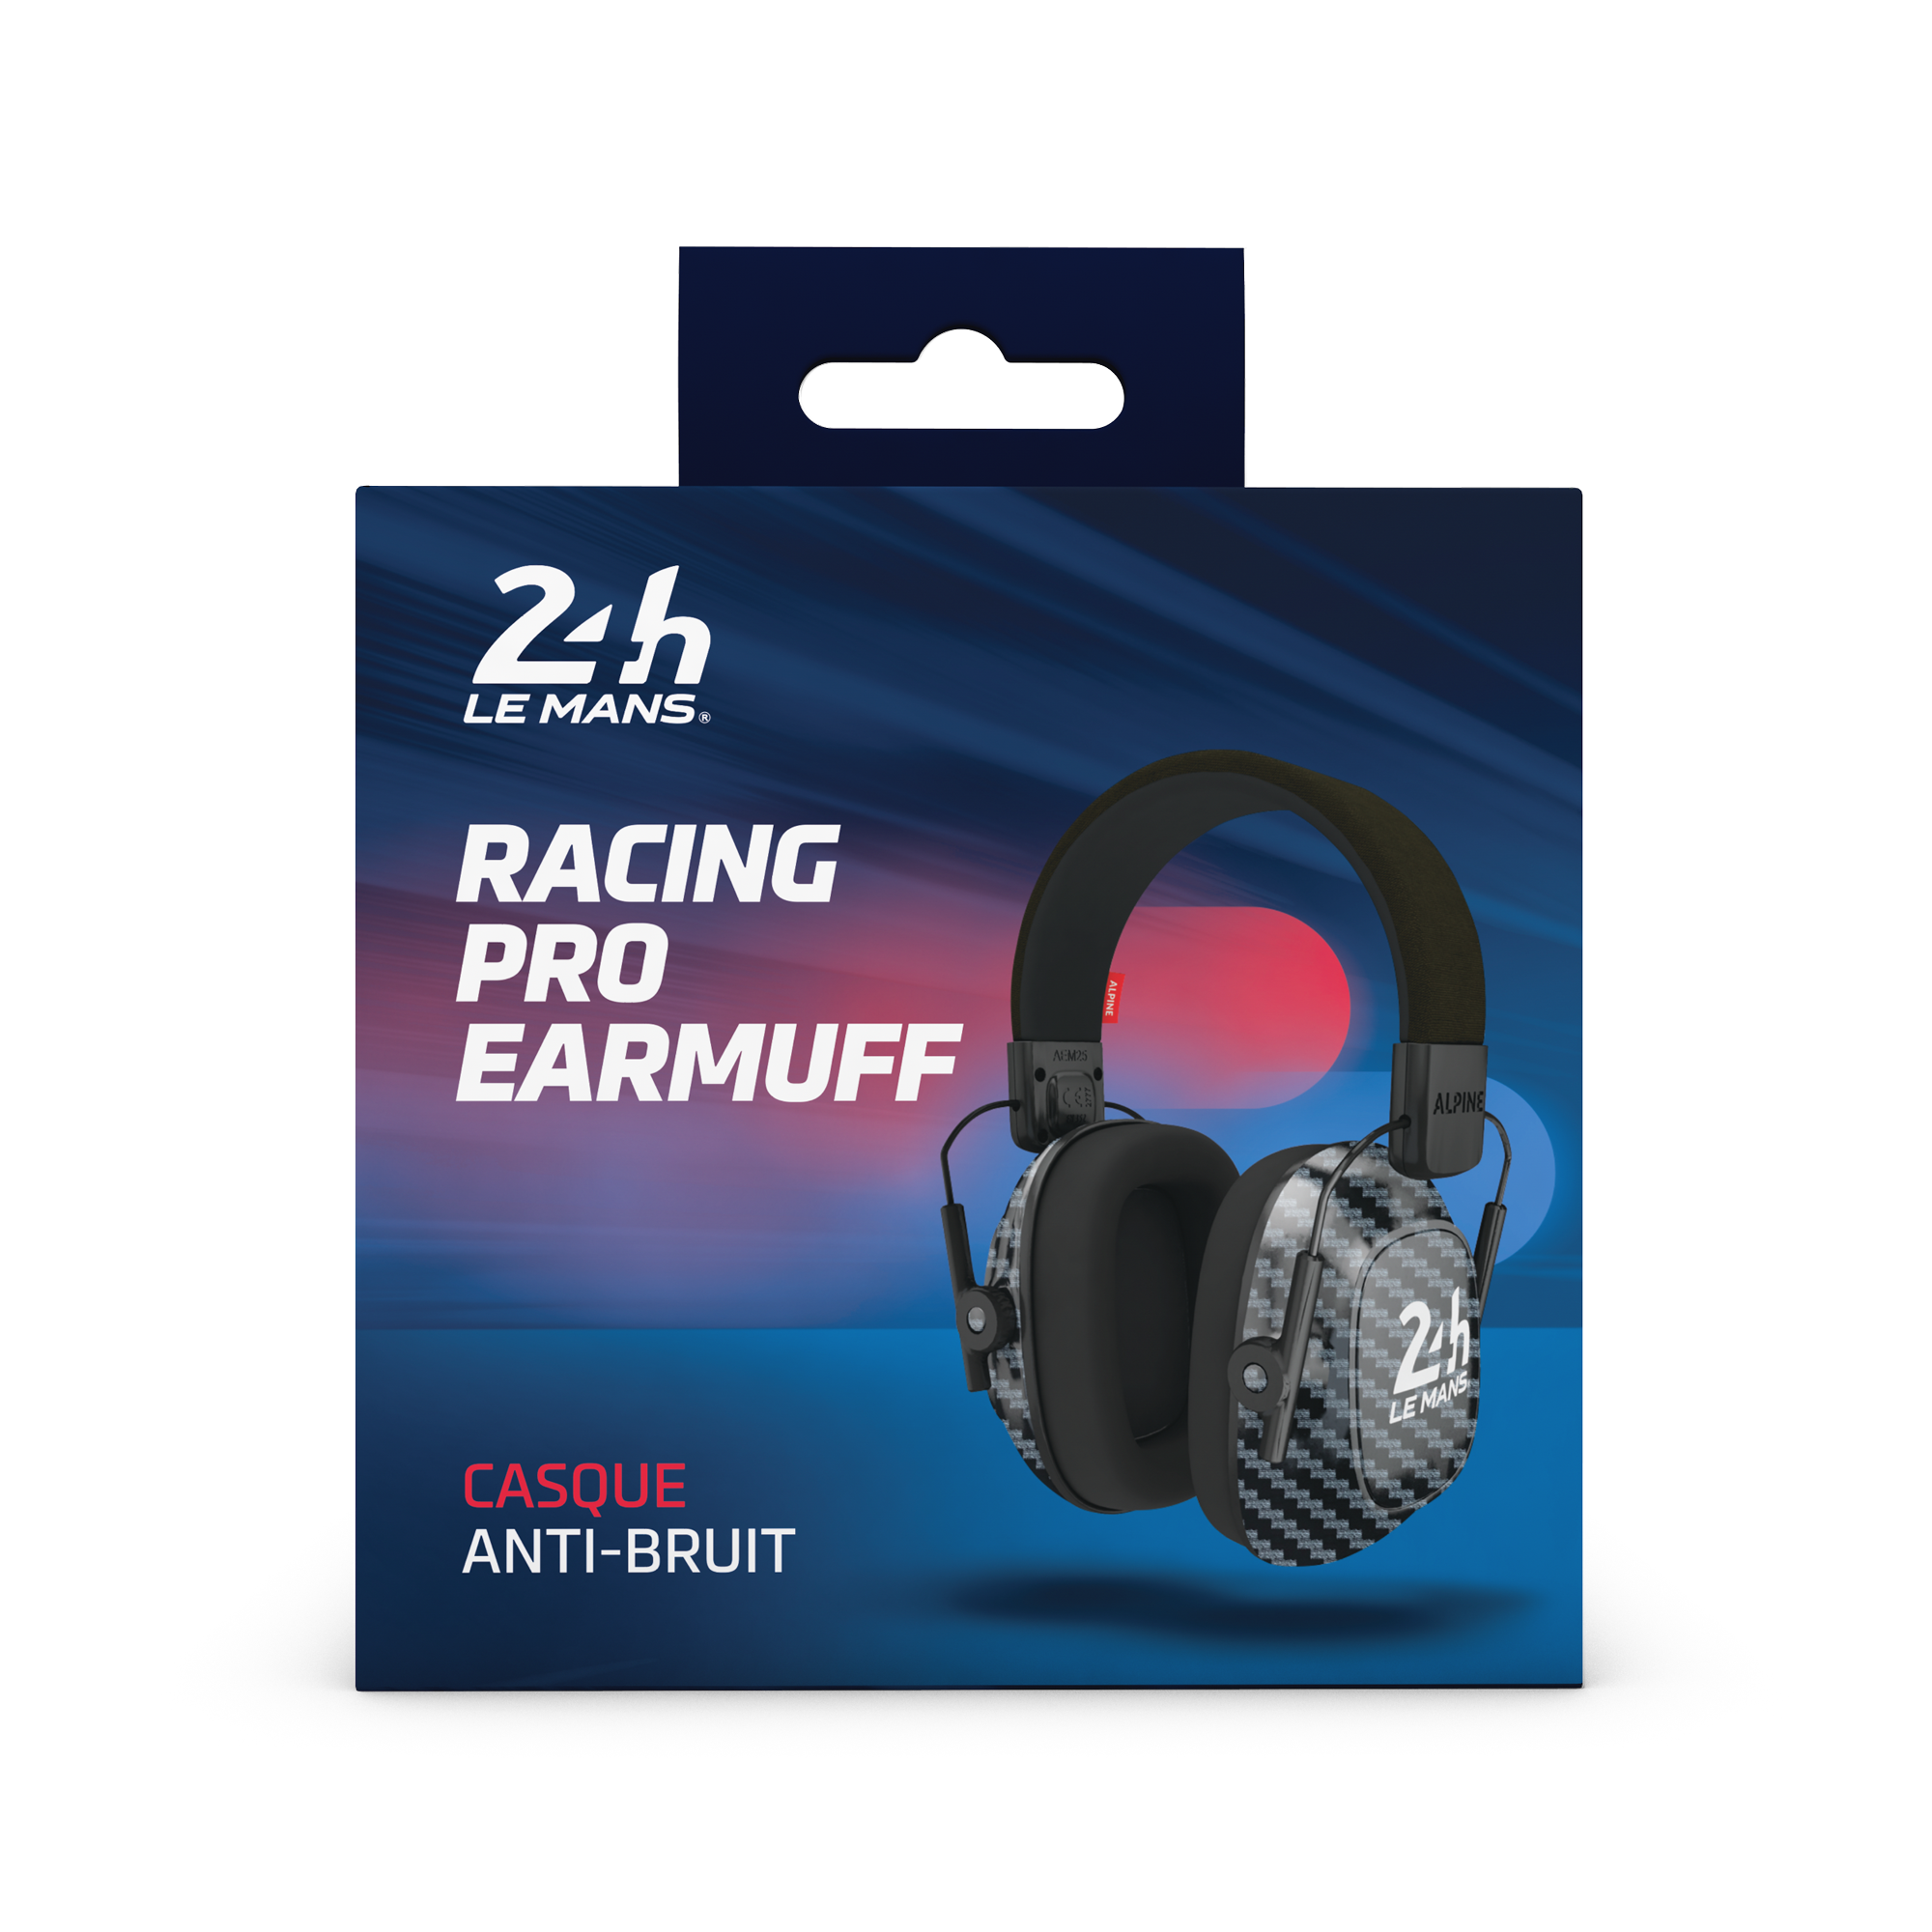 Casque anti-bruit 24H Le Mans® Racing Pro Earmuff – Alpine